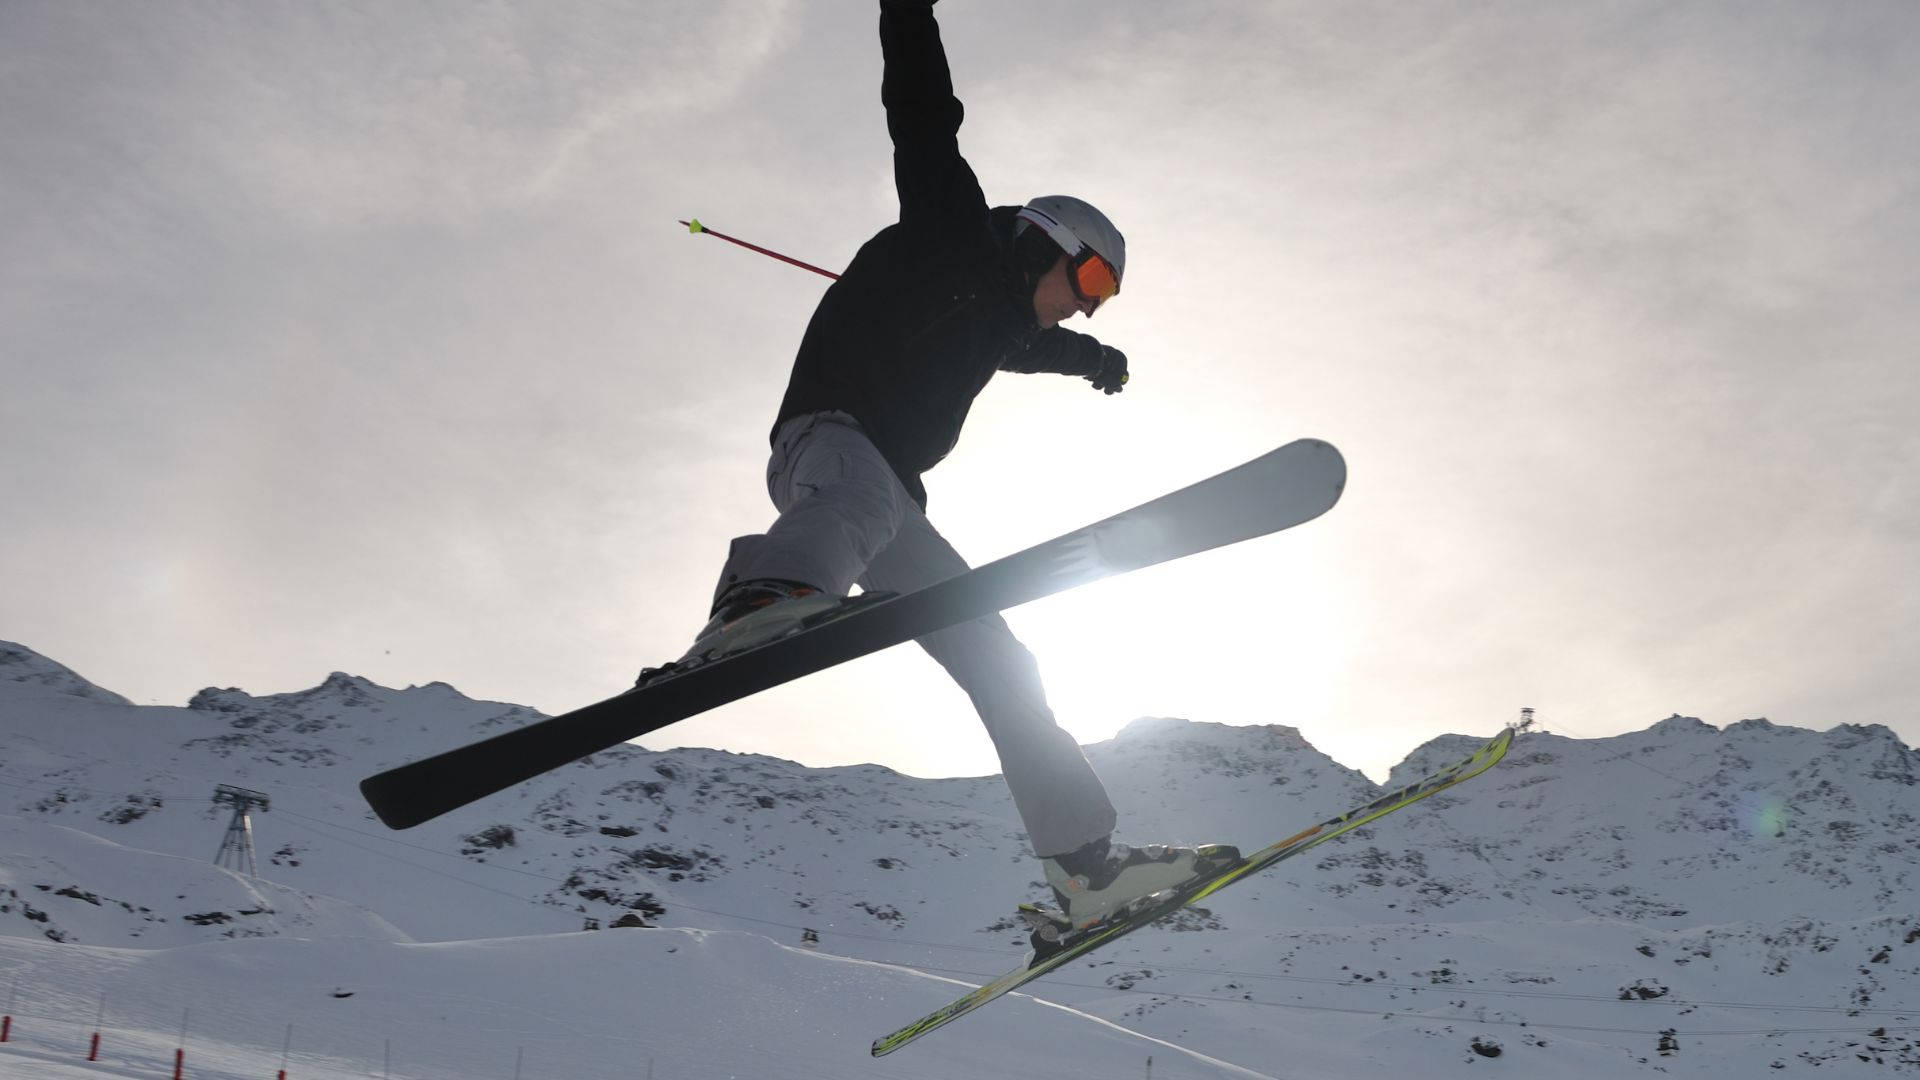 Best Ski Jumping Athlete